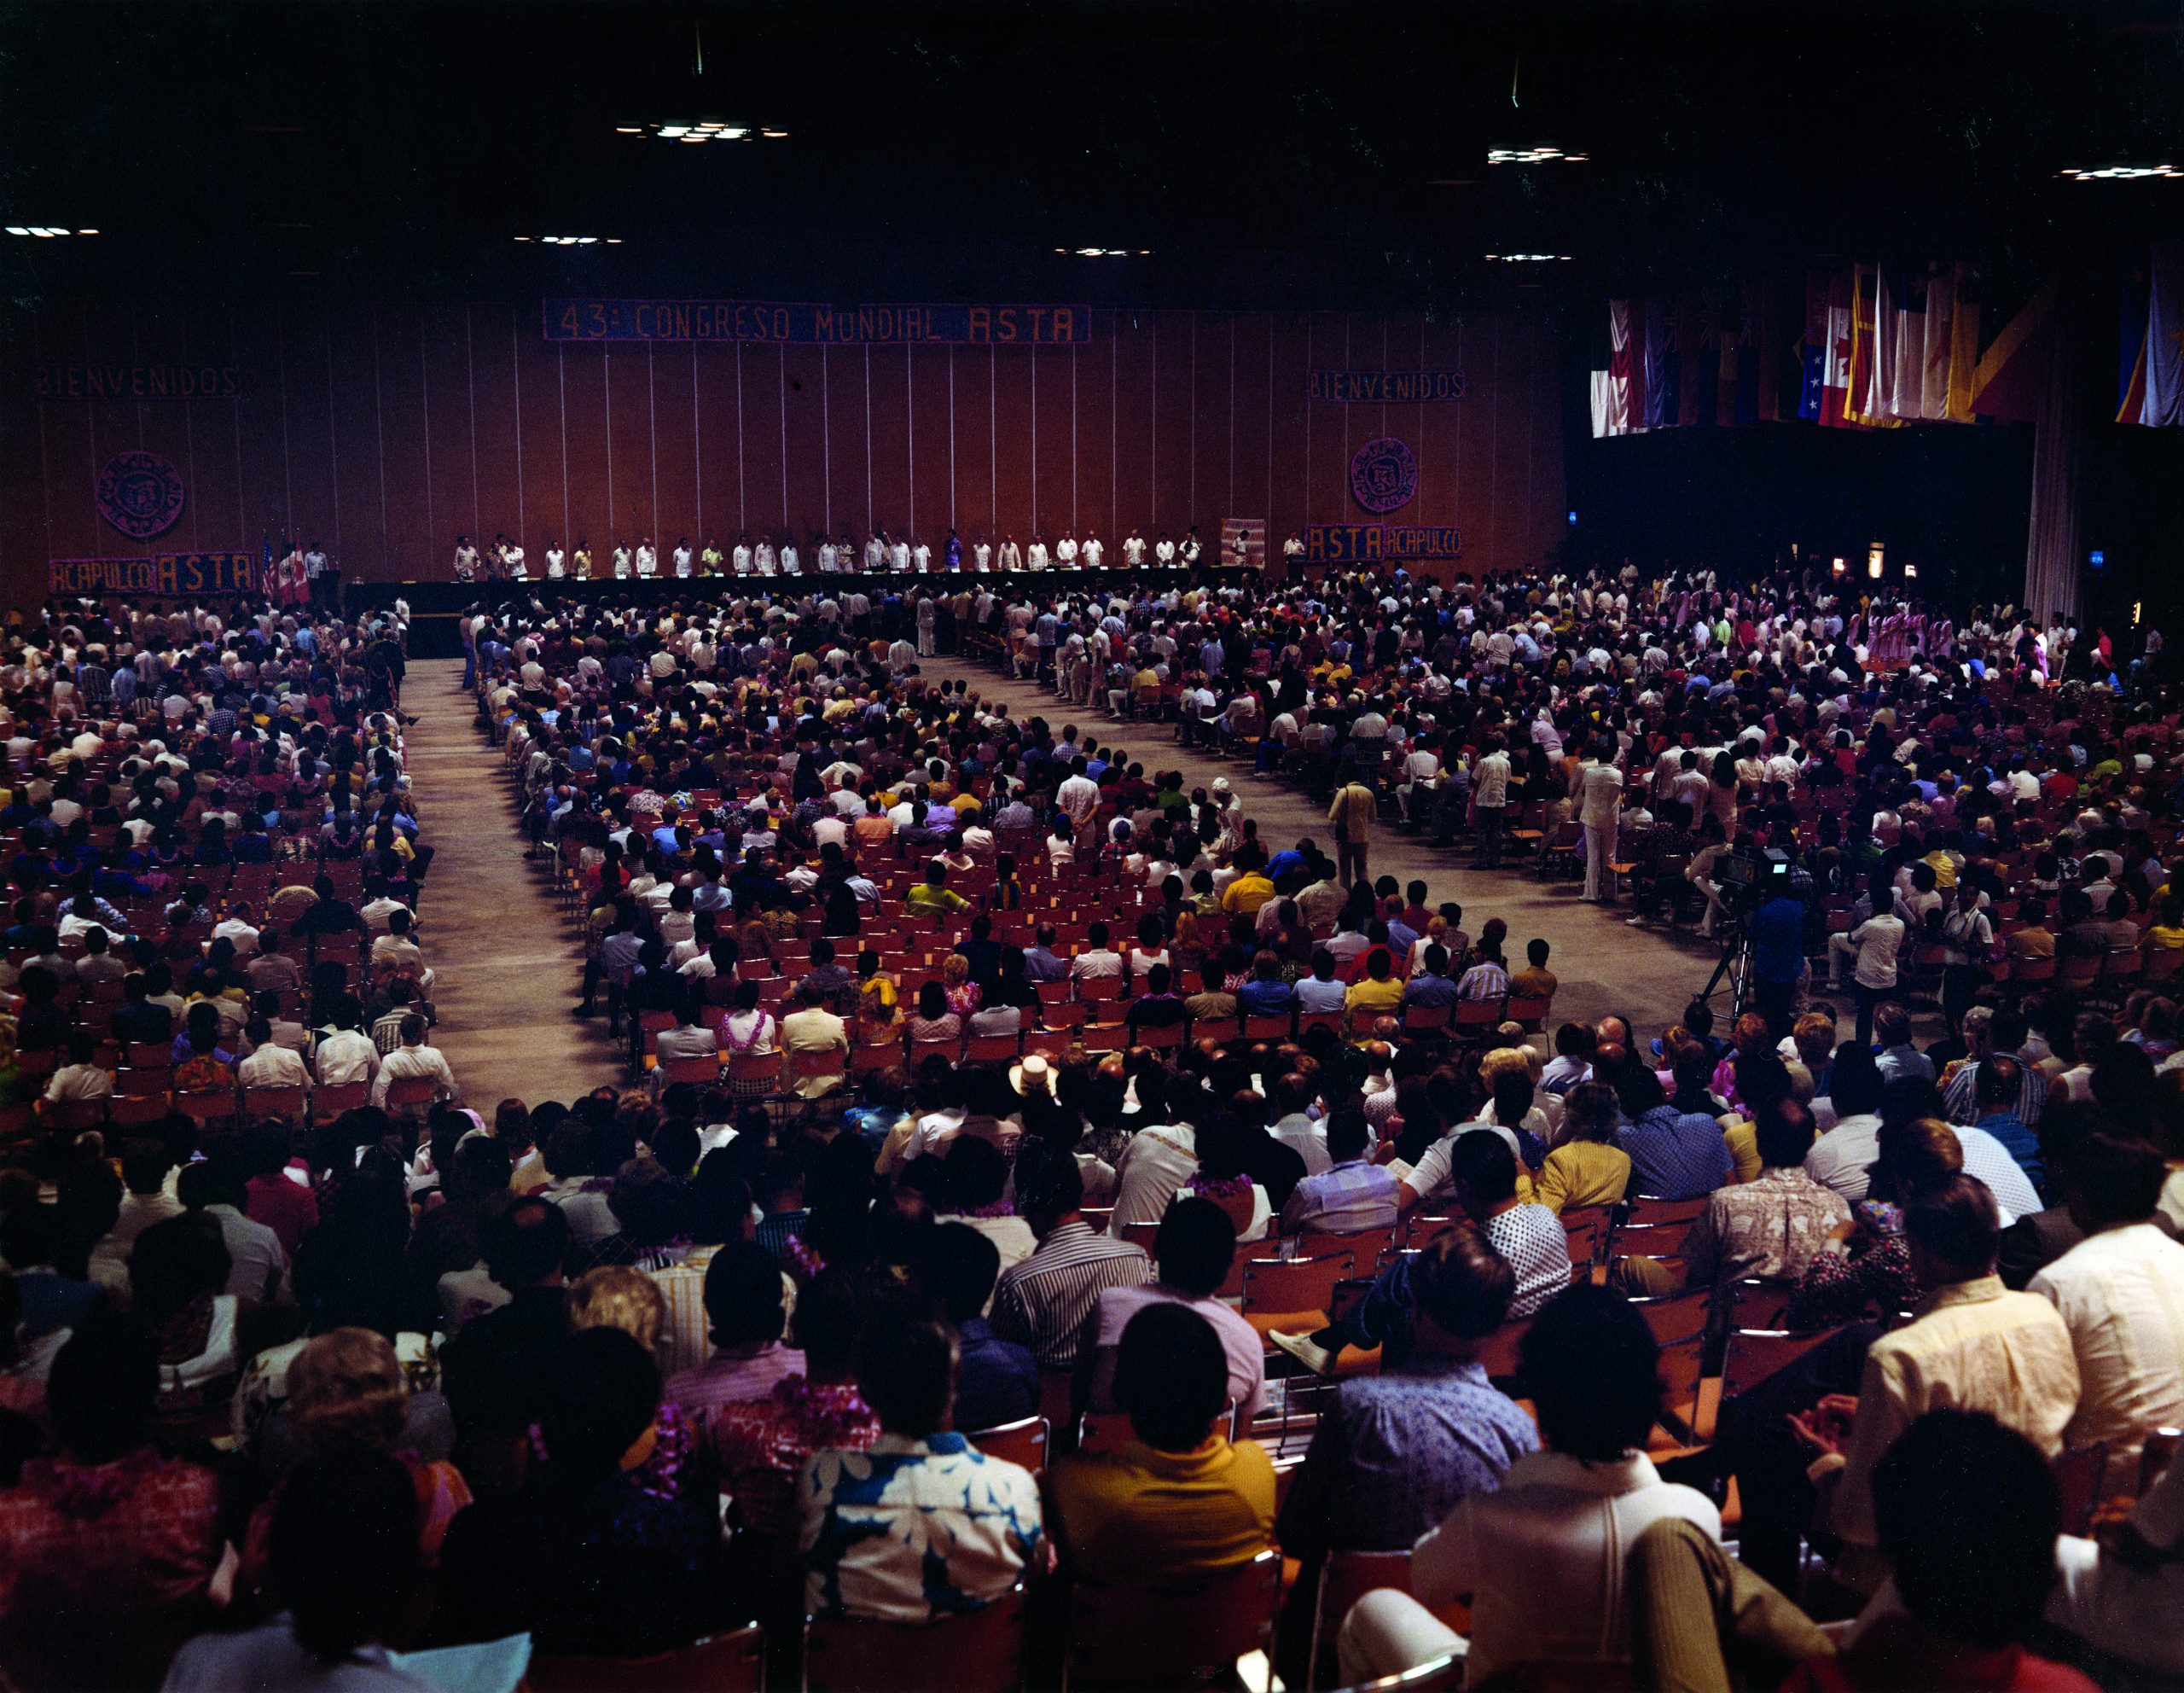 Evento inaugural del conjunto,Congreso Mundial de la ASTA. 12/11/73